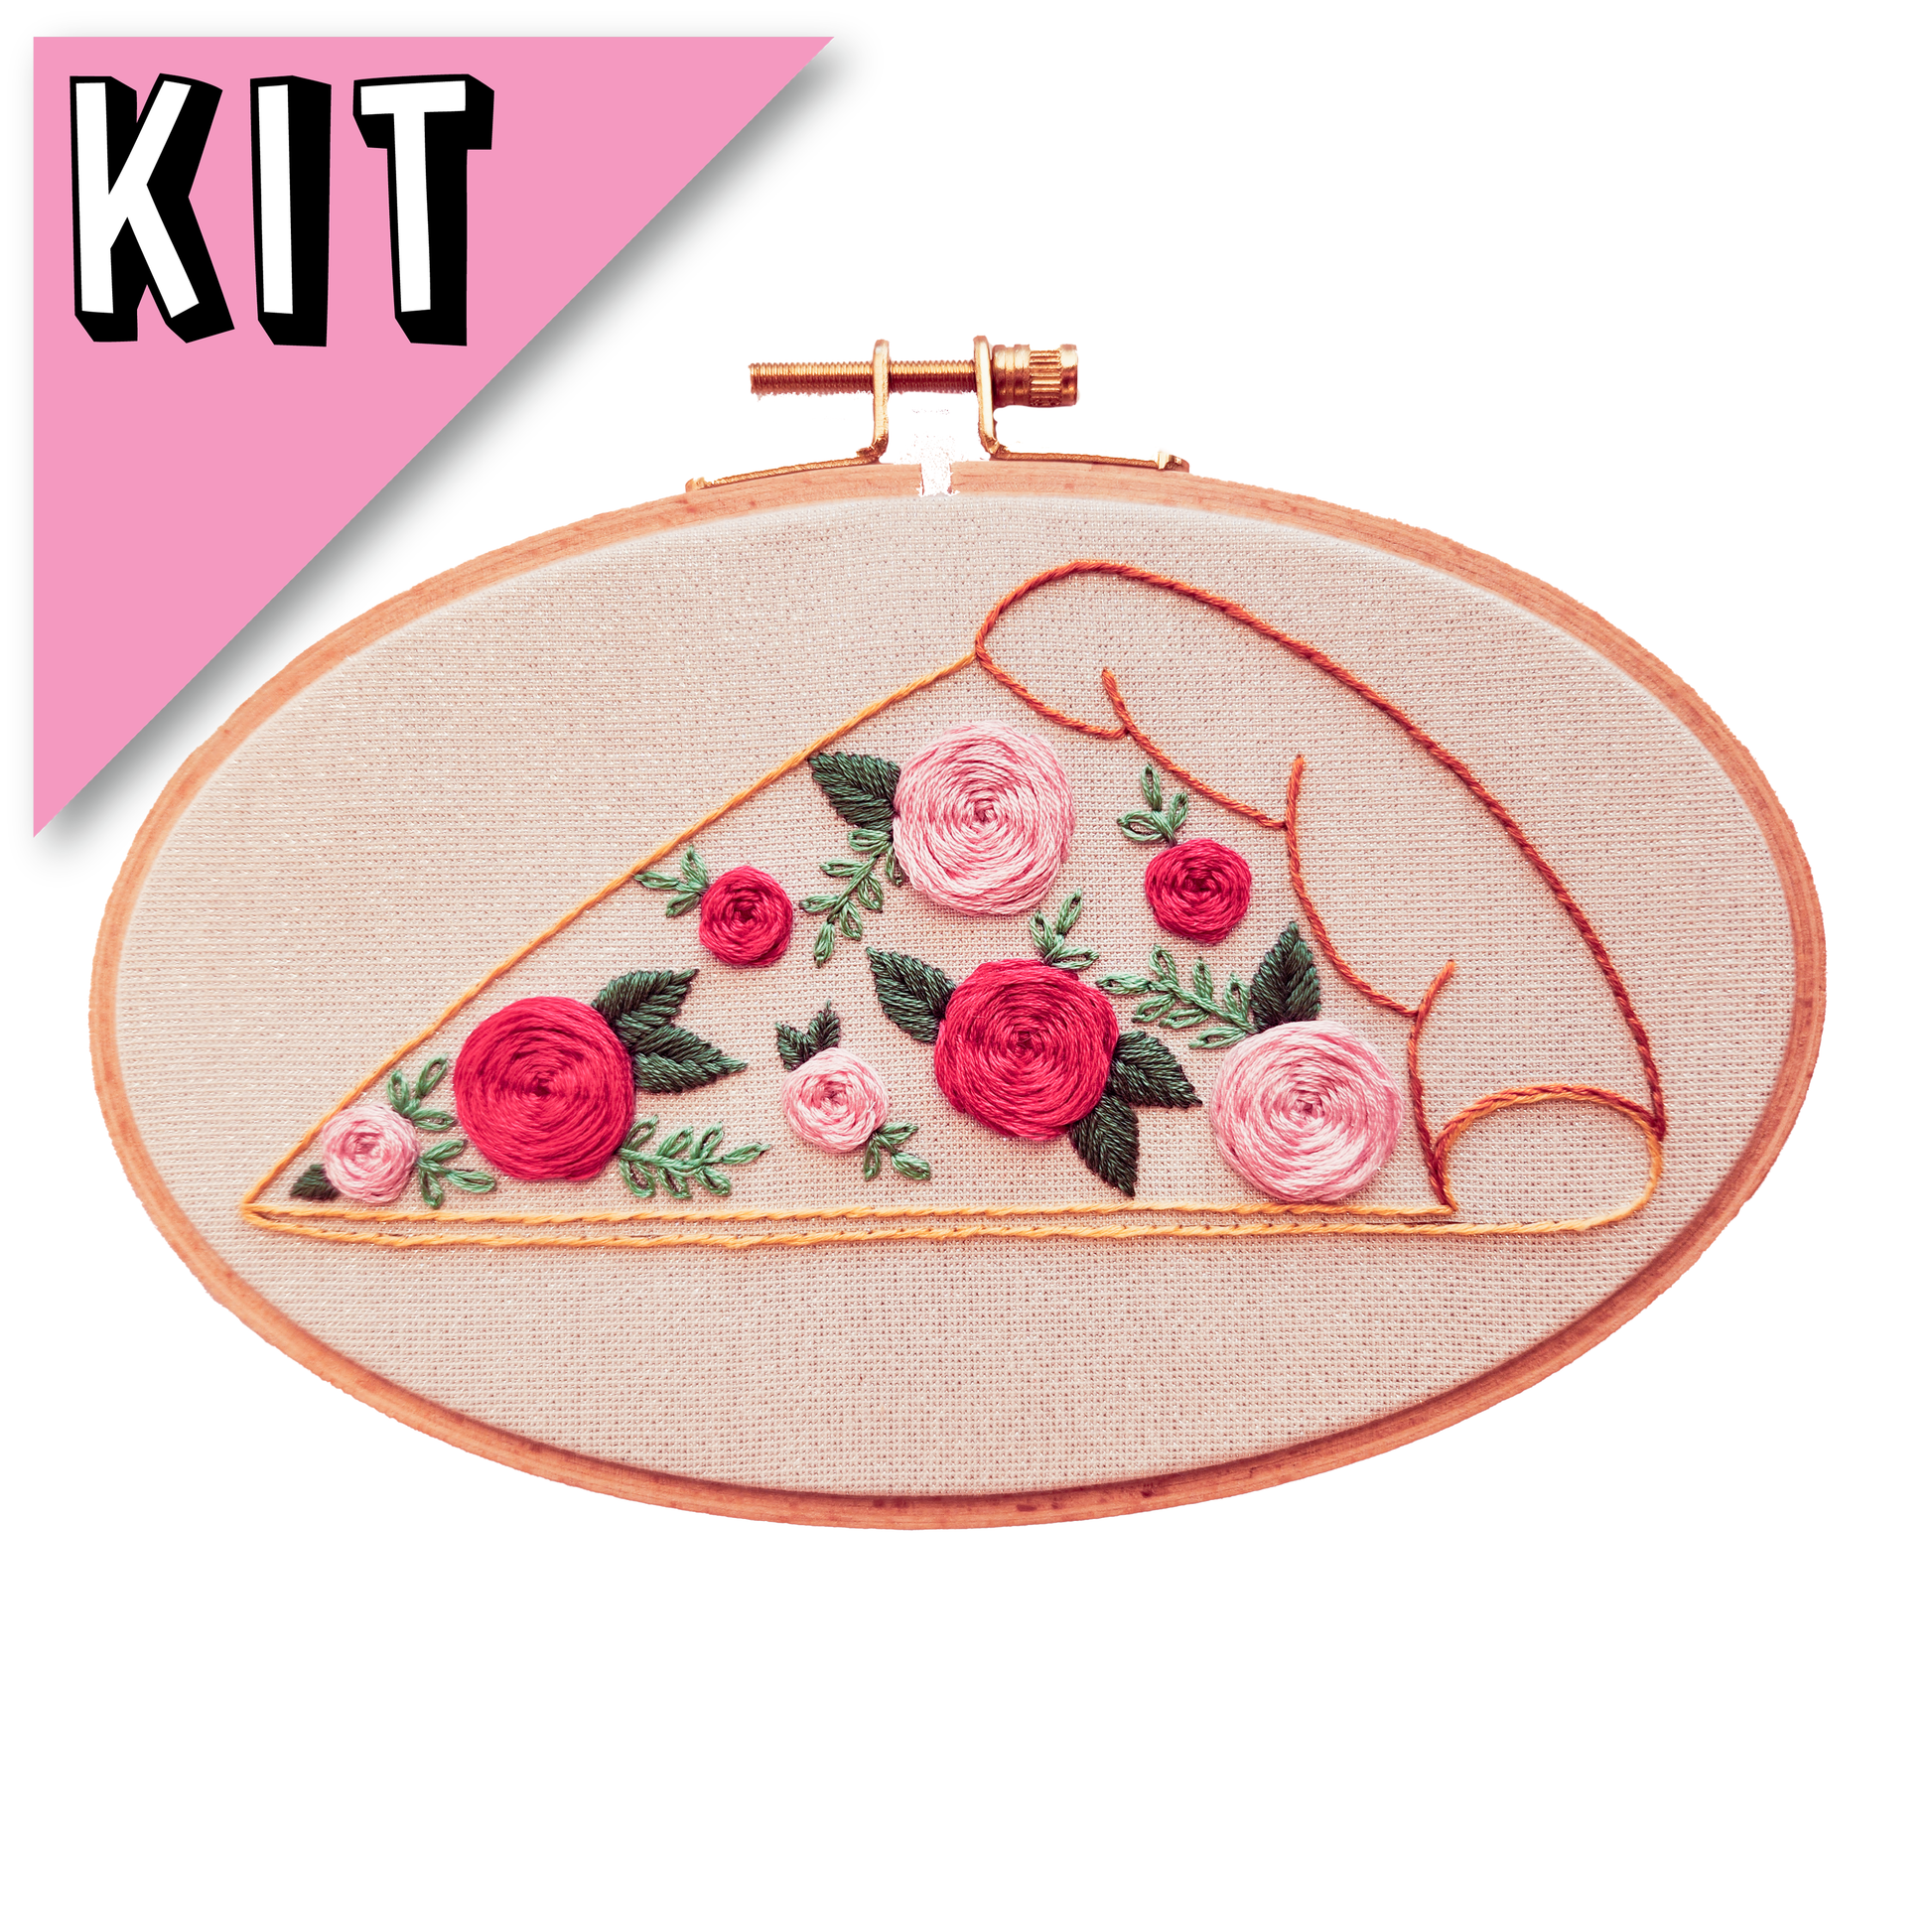 Beginner Embroidery Kit - Pepper-rosie Pizza, 8 x 5 in. – Pretty